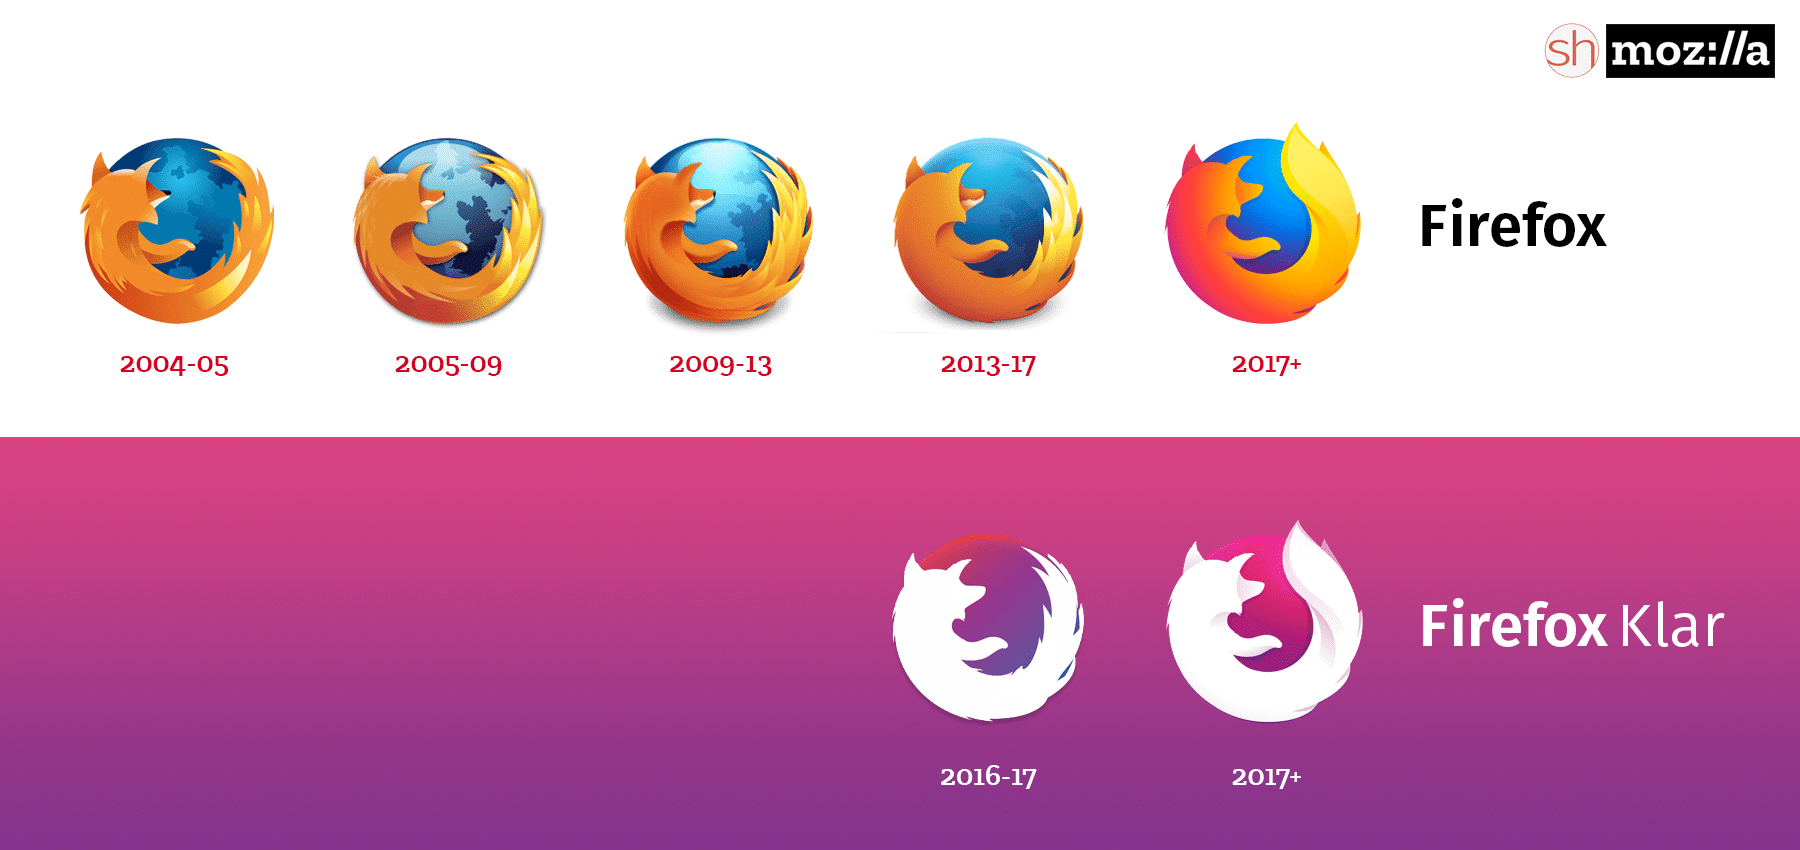 Google Firefox Logo - Update Firefox icon when Firefox 57 is released · Issue